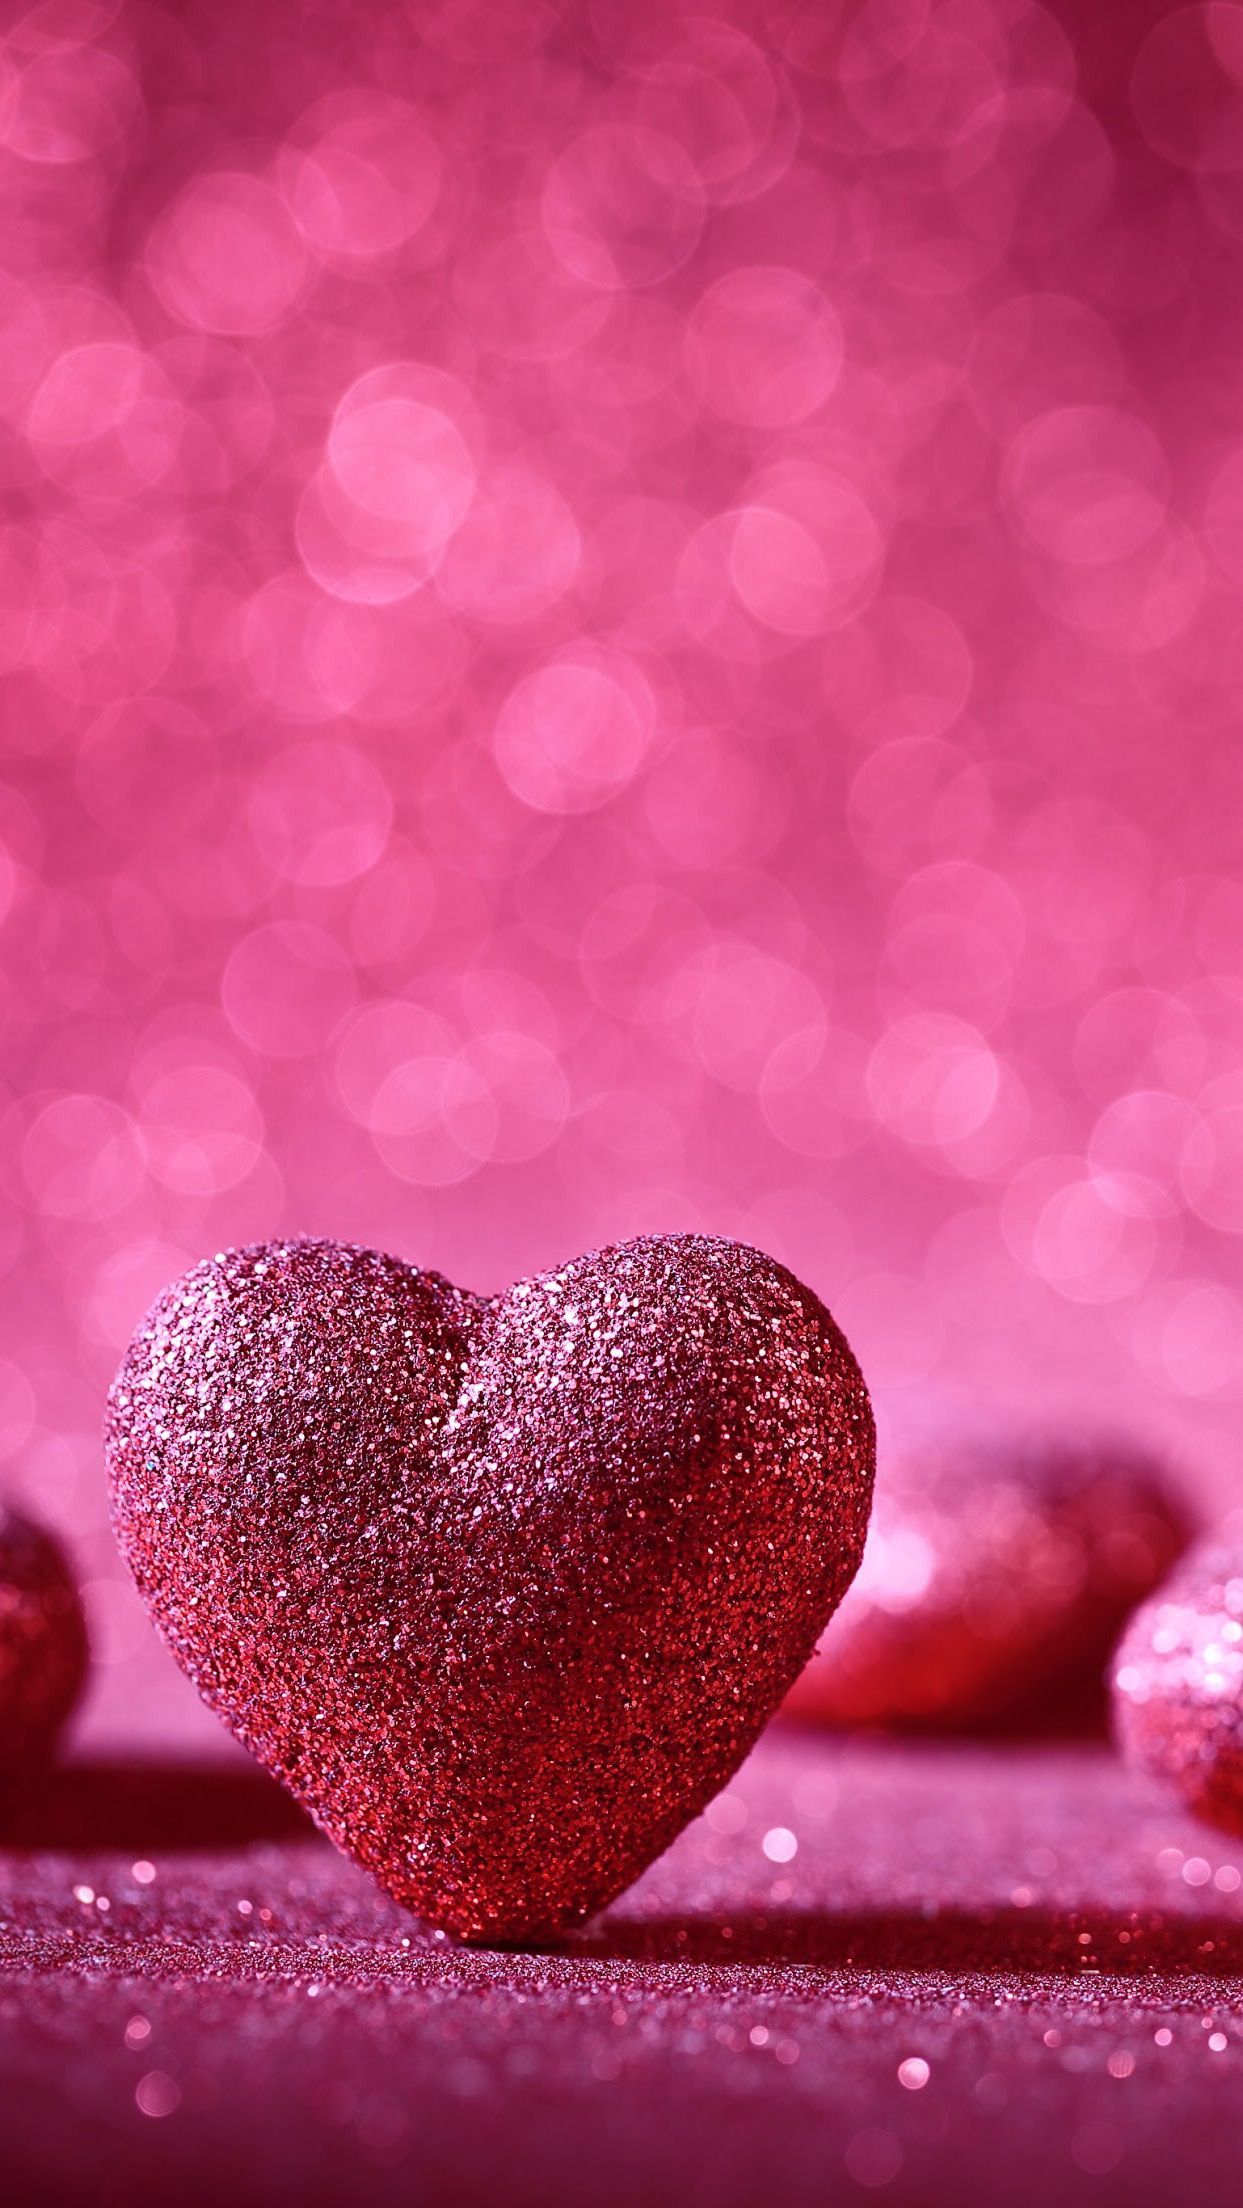 70685 Pink Hearts Glitter Images Stock Photos  Vectors  Shutterstock